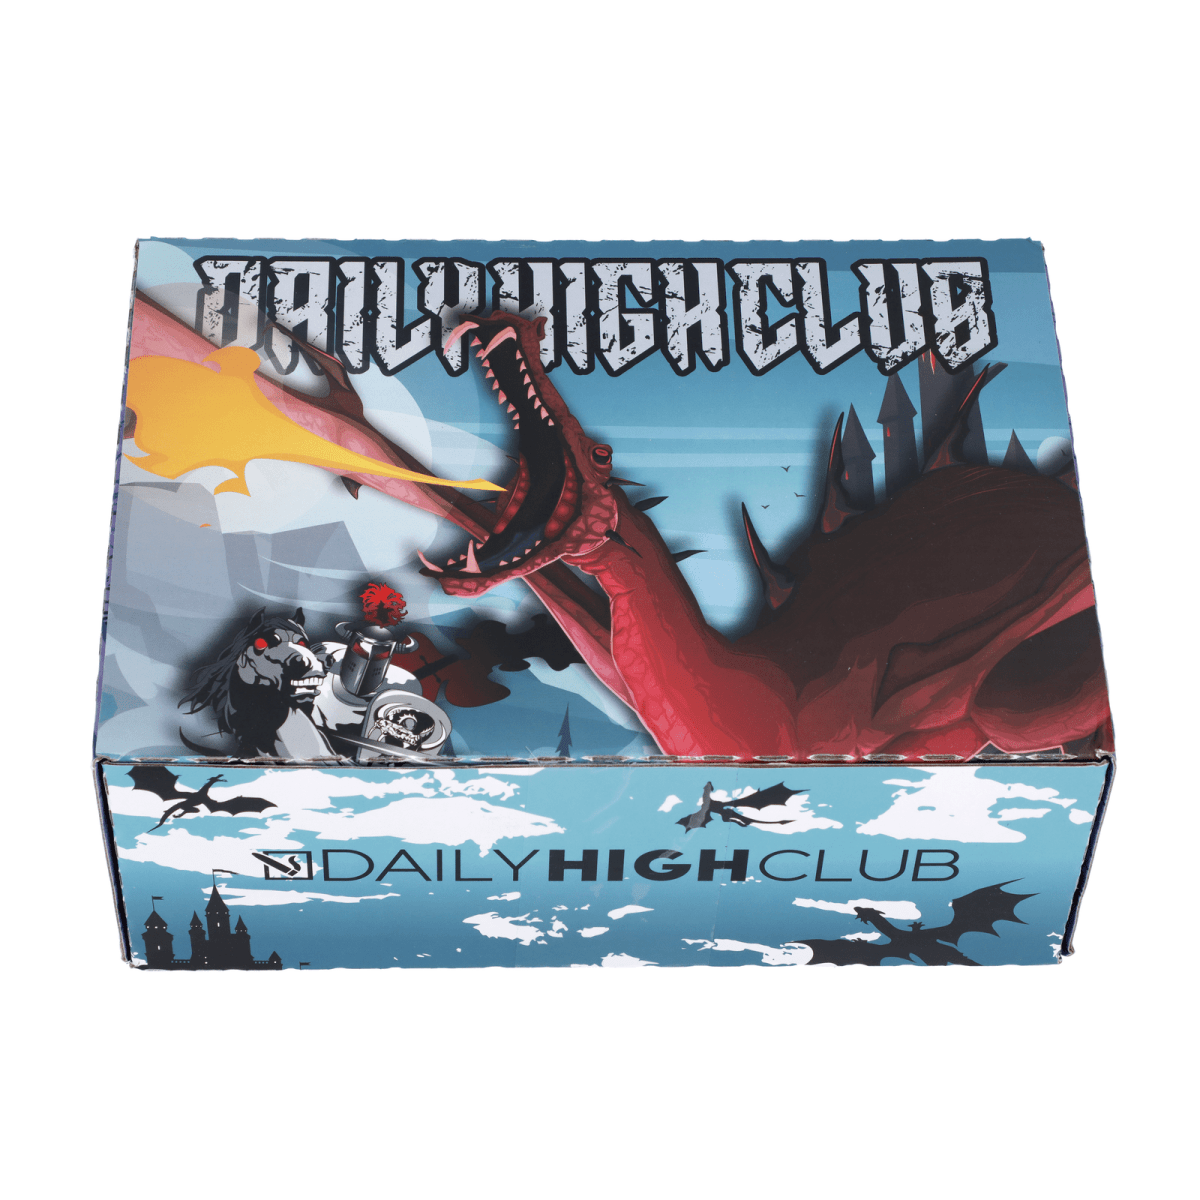 Daily High Club subscription box "Dragon" Box